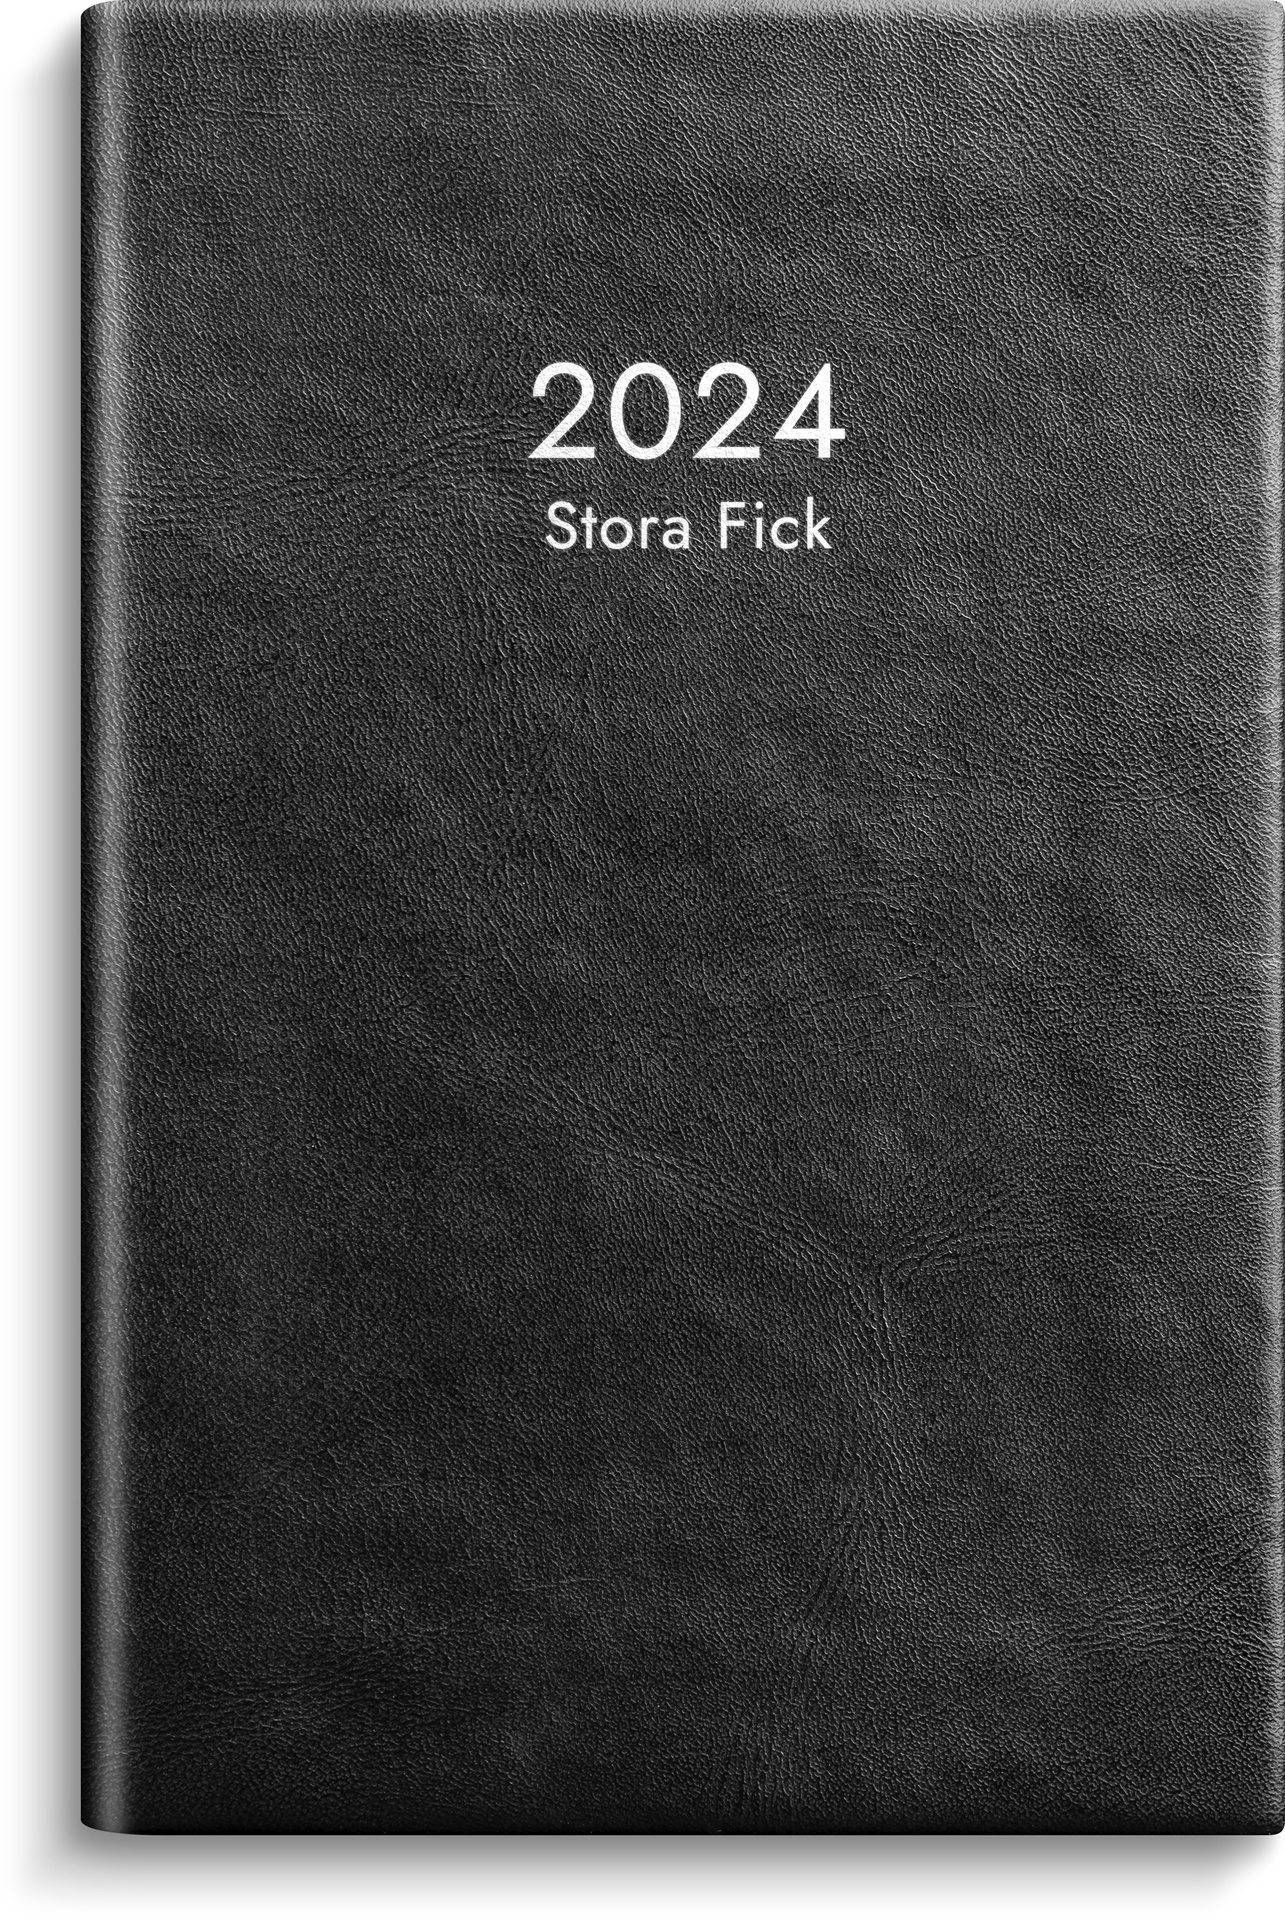 [61114624] Stora Fick svart 2024